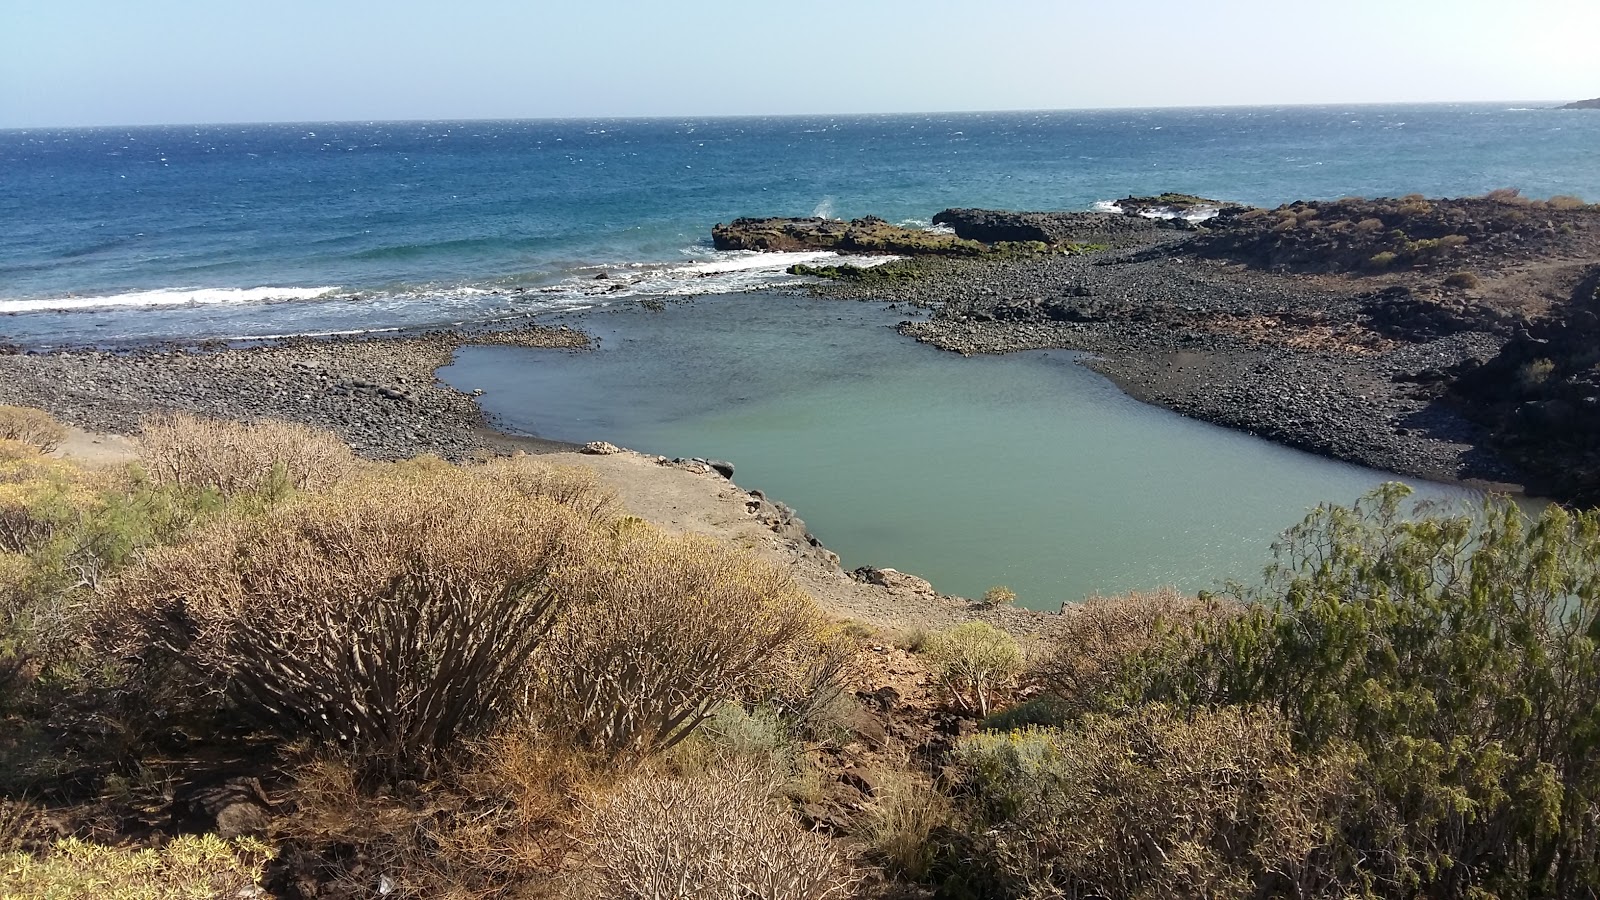 Foto de Playa El Barranco com alto nível de limpeza